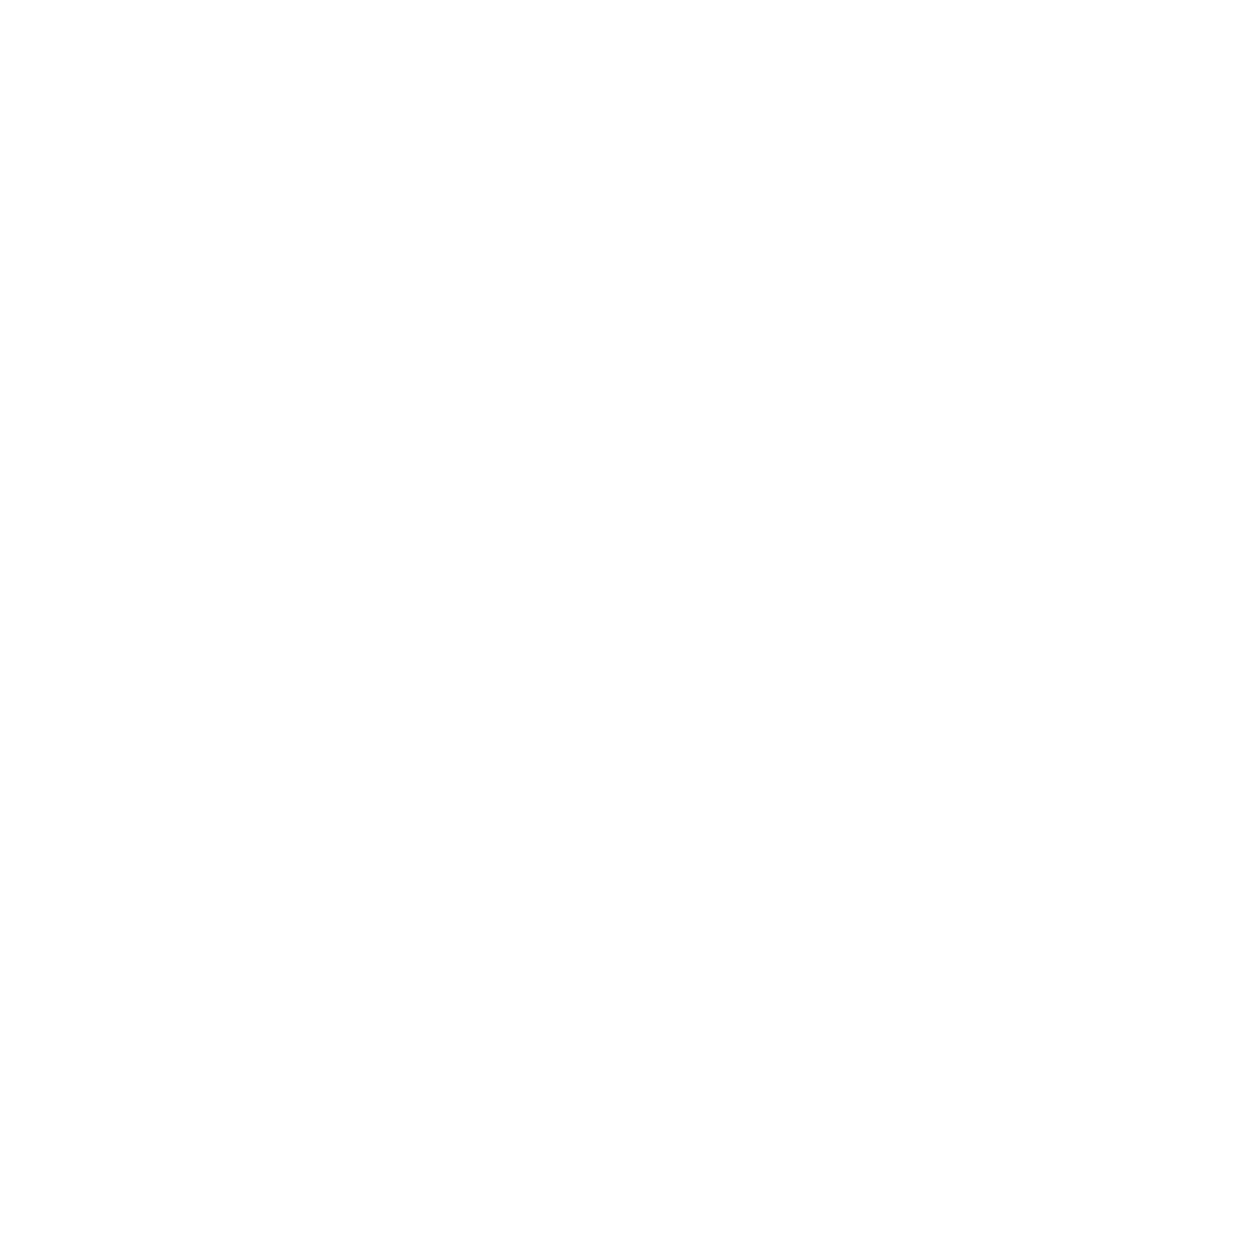 Simplifire